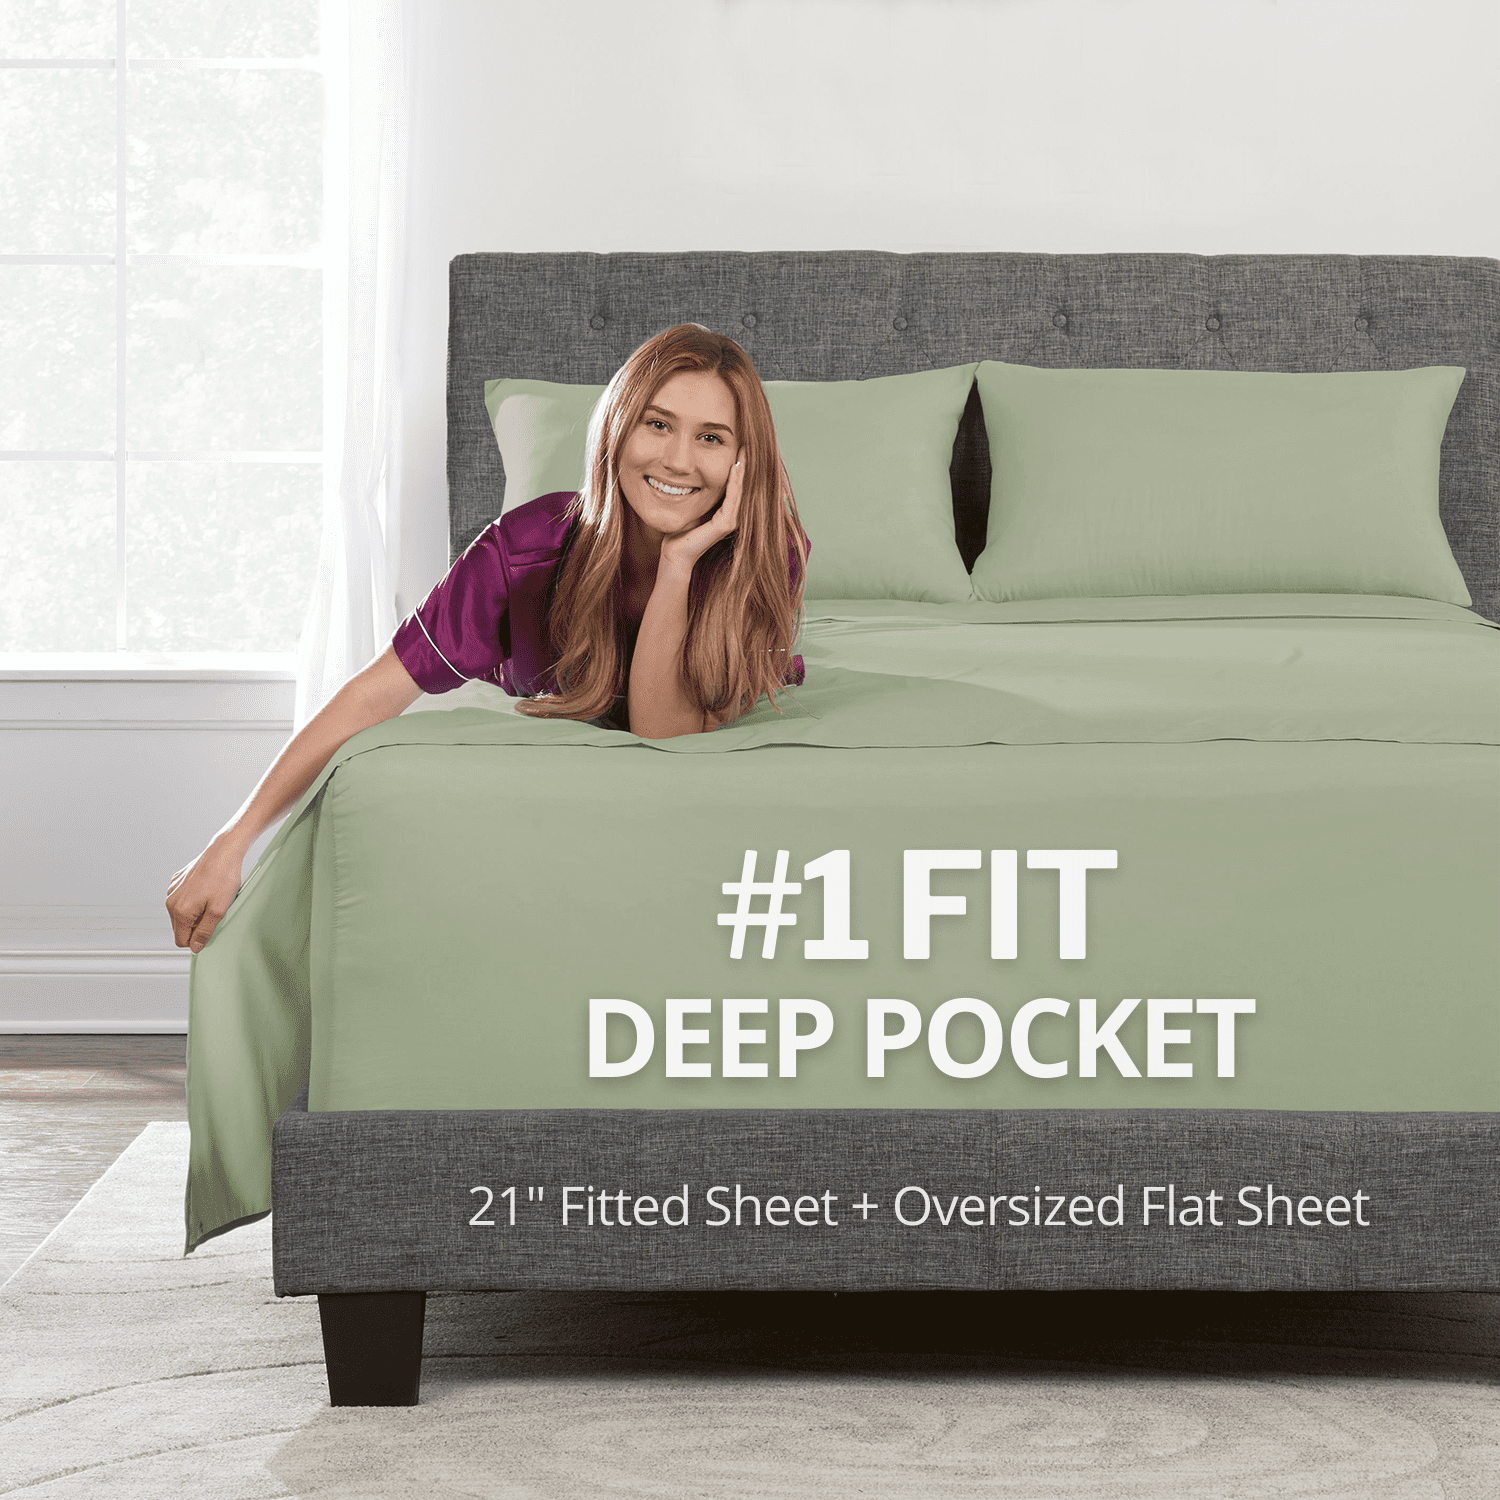 Bedsure Deep Pocket Queen Sheets Set - Fits Mattresses Up to 21 Thick, 4  Piece Air Mattress Sheets …See more Bedsure Deep Pocket Queen Sheets Set 